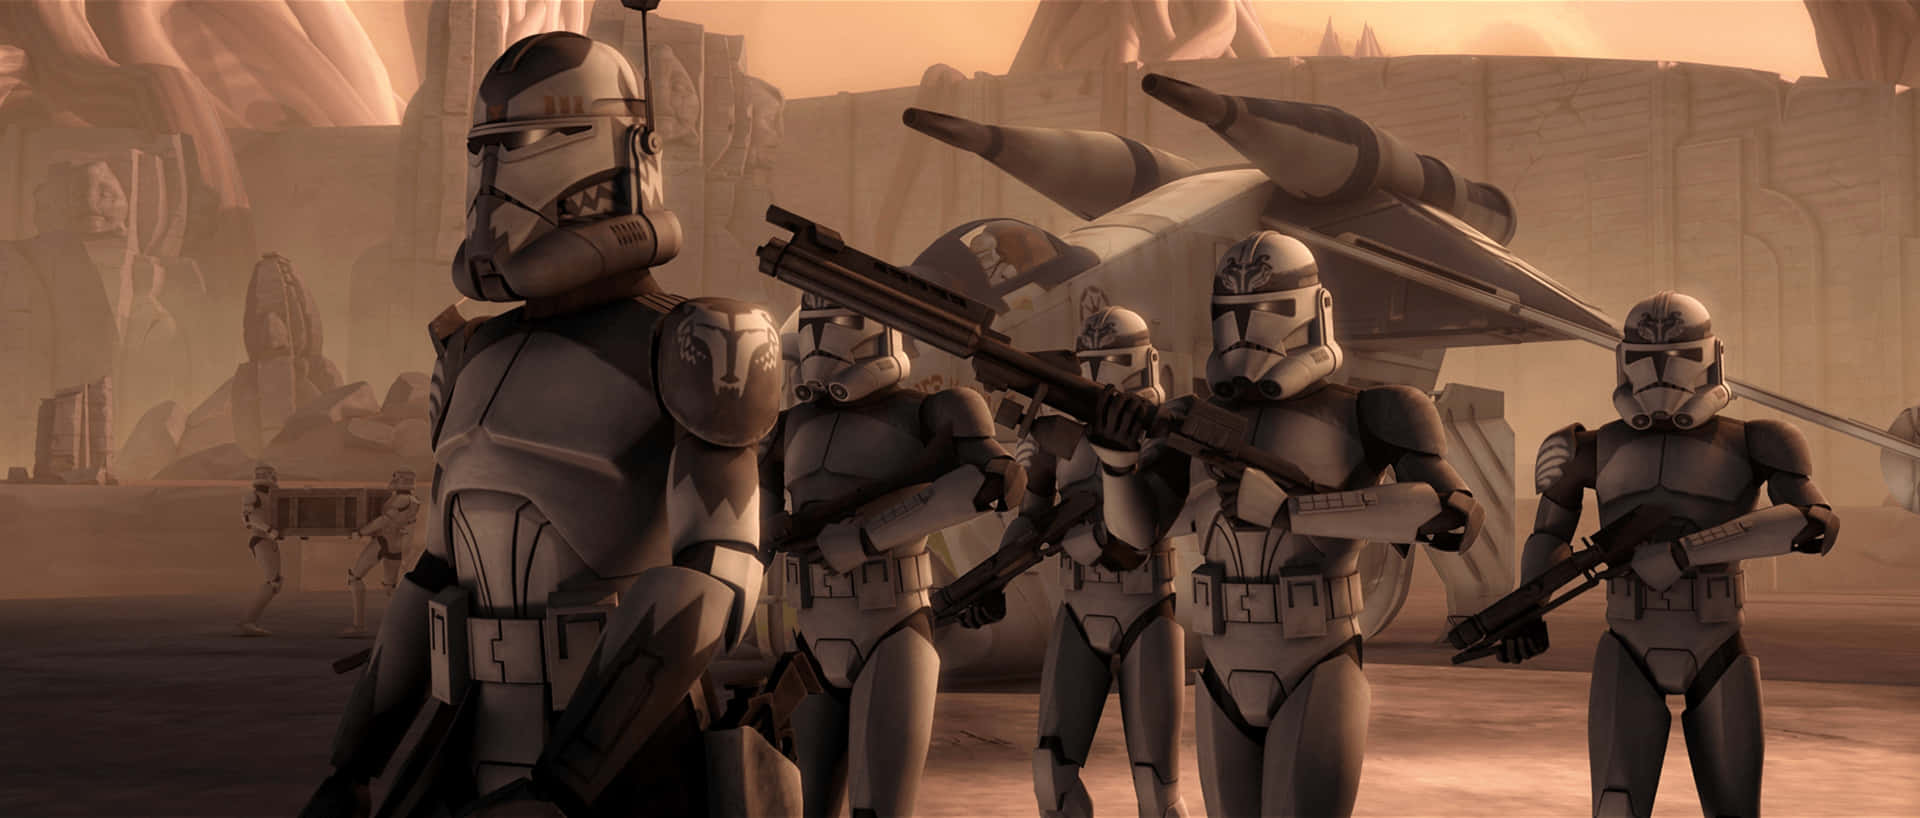 Star Wars Clone Troopers The Clone Wars